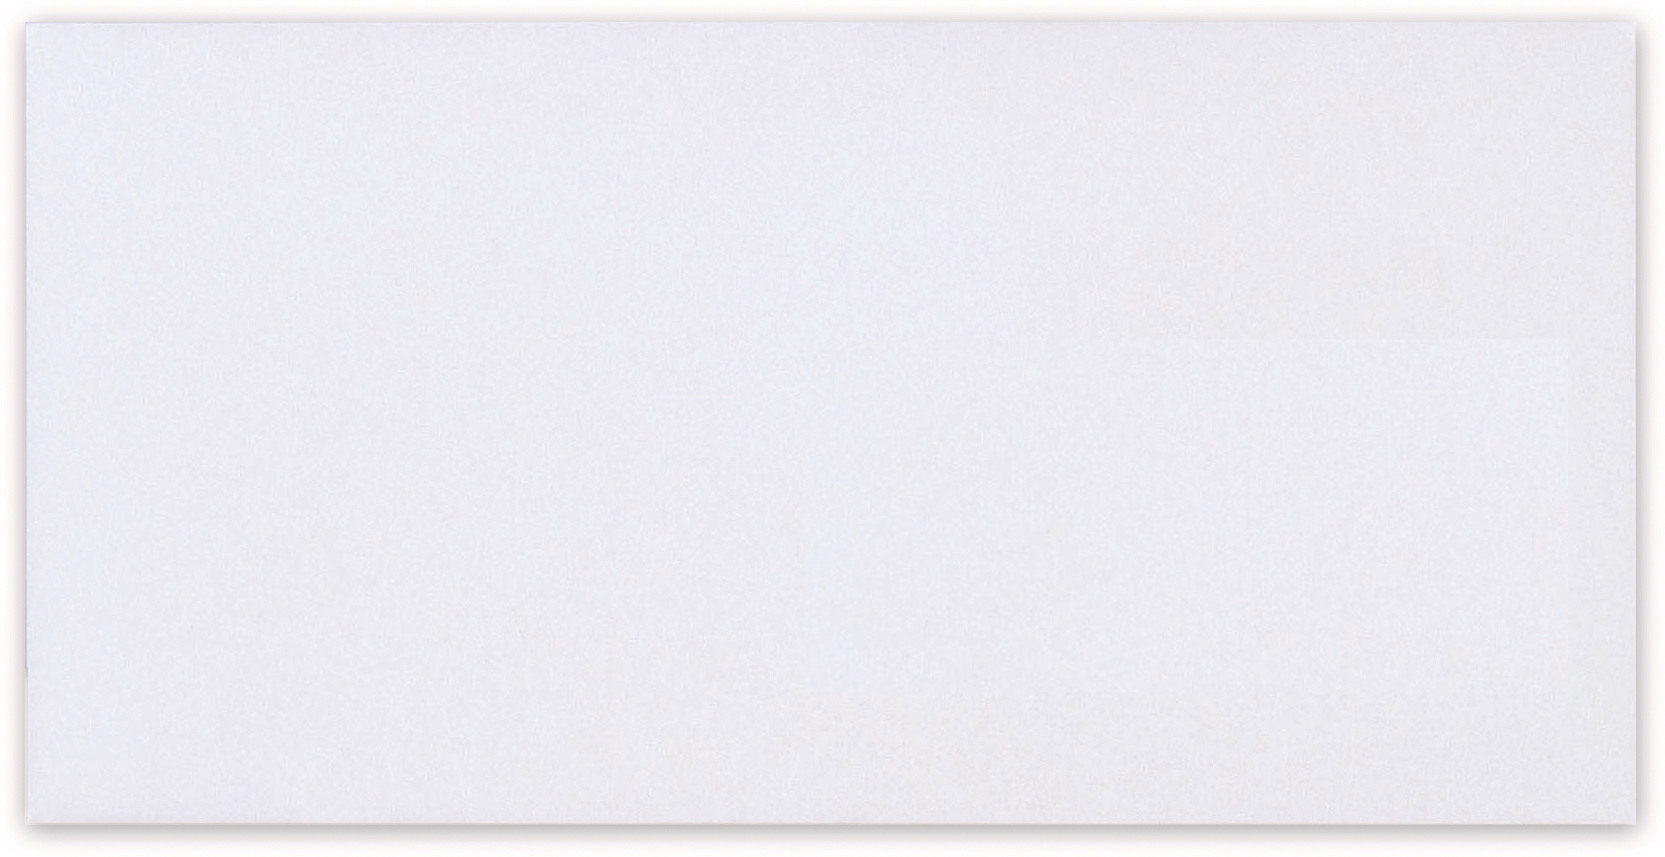 BÜROLINE Enveloppe s/fenêtre C5/6 103481 100g, blanc 500 pcs.